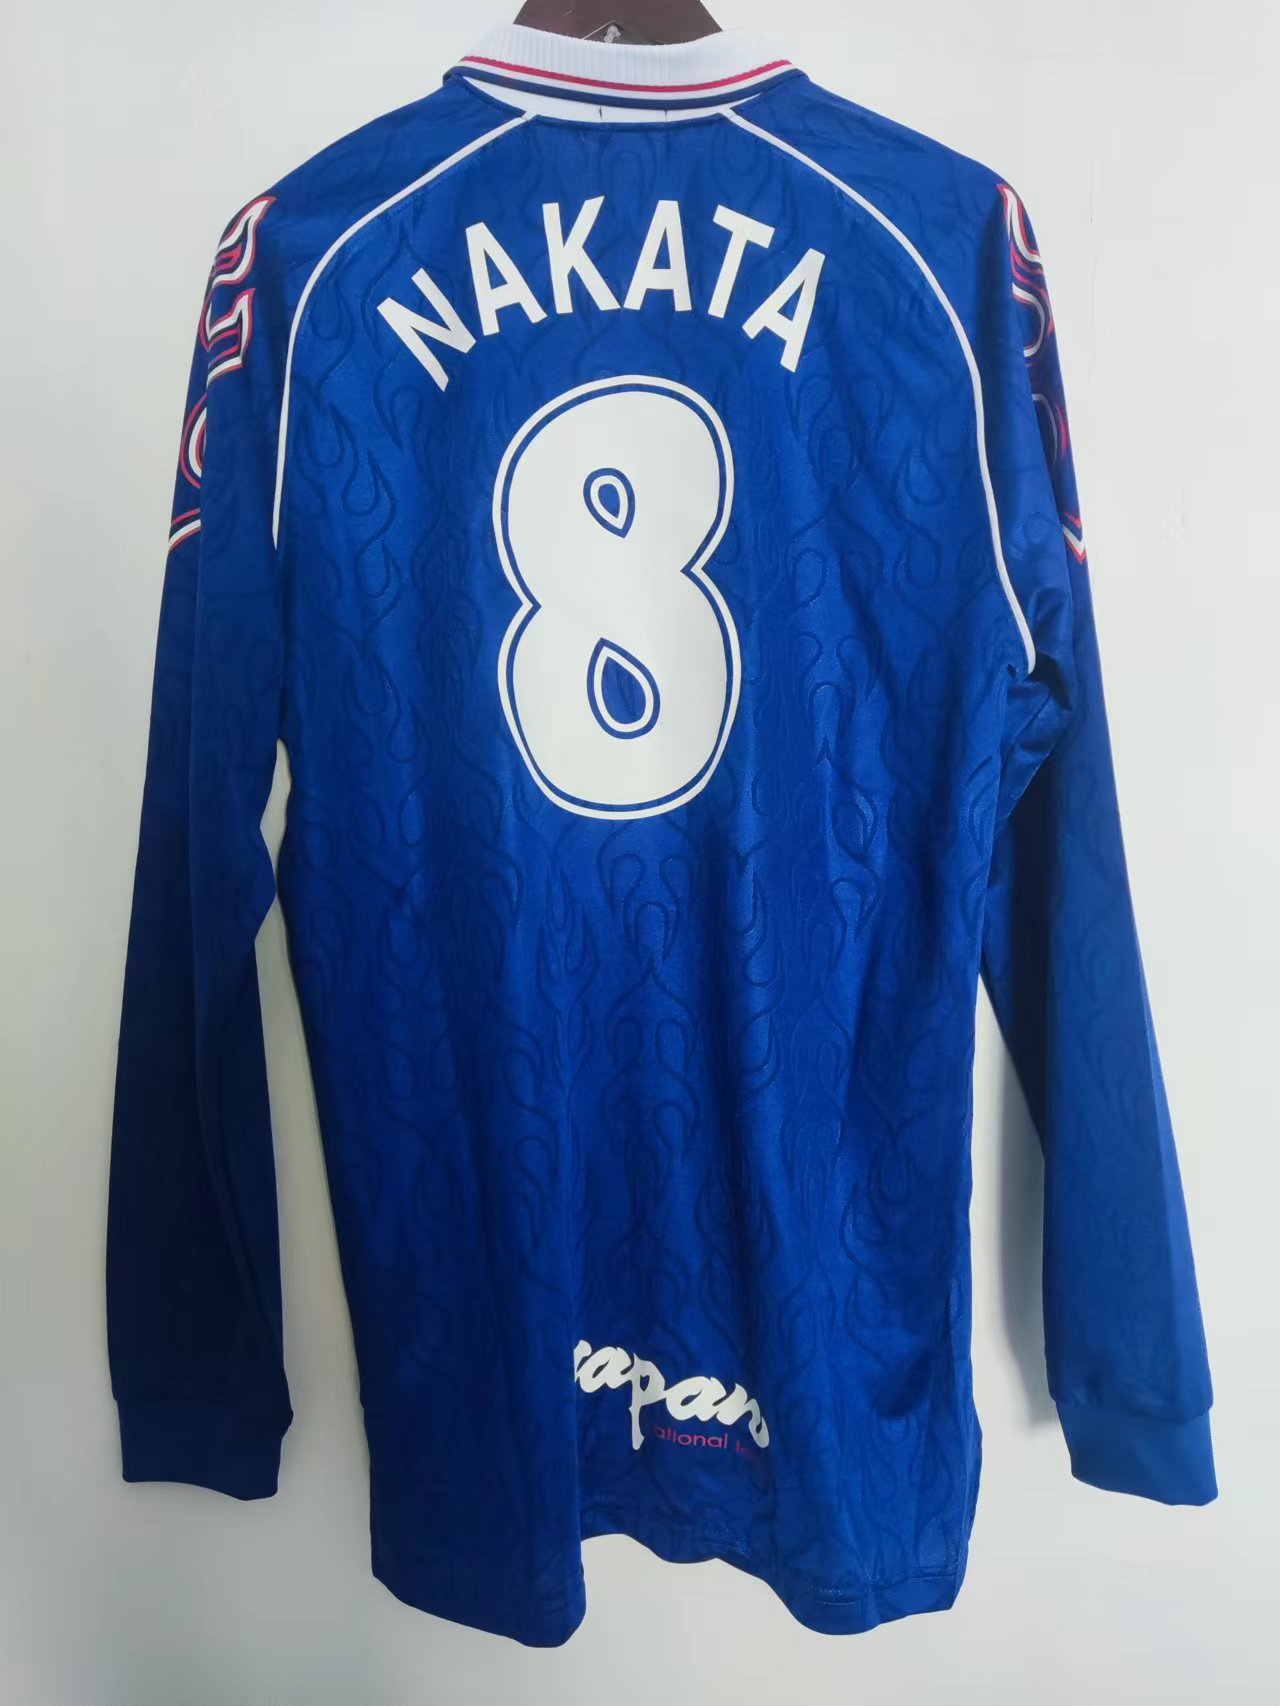 Japan Soccer Jersey Shirt size M or L Original Official 1998 World Cup 0625  M